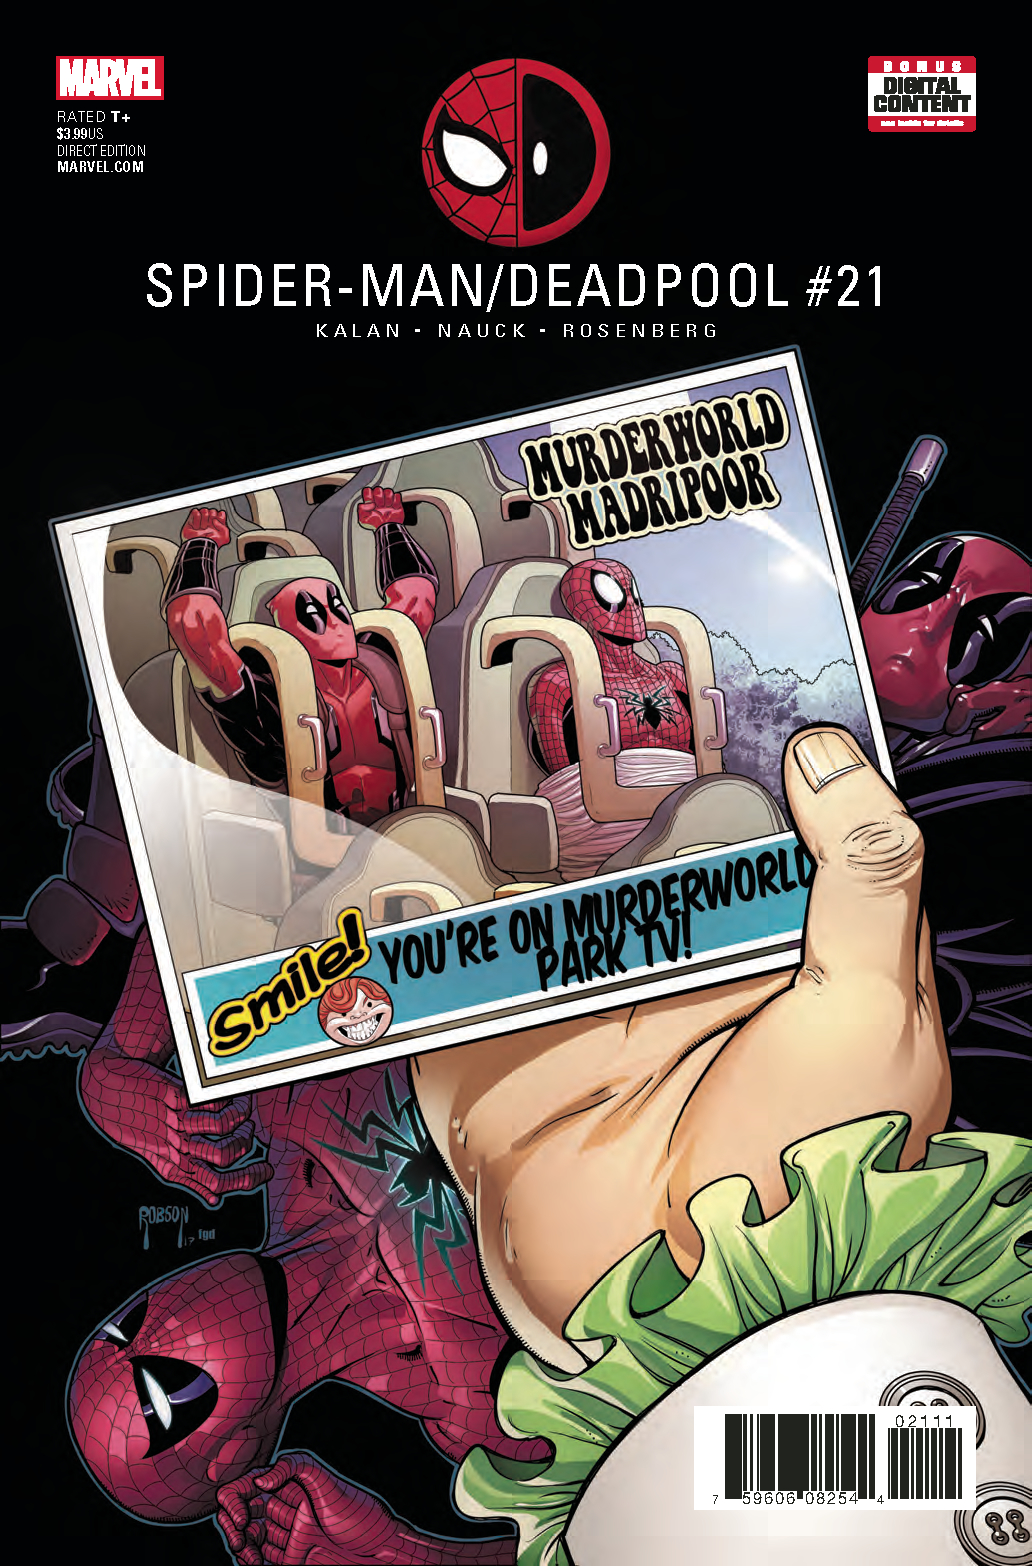 SPIDER-MAN DEADPOOL #21